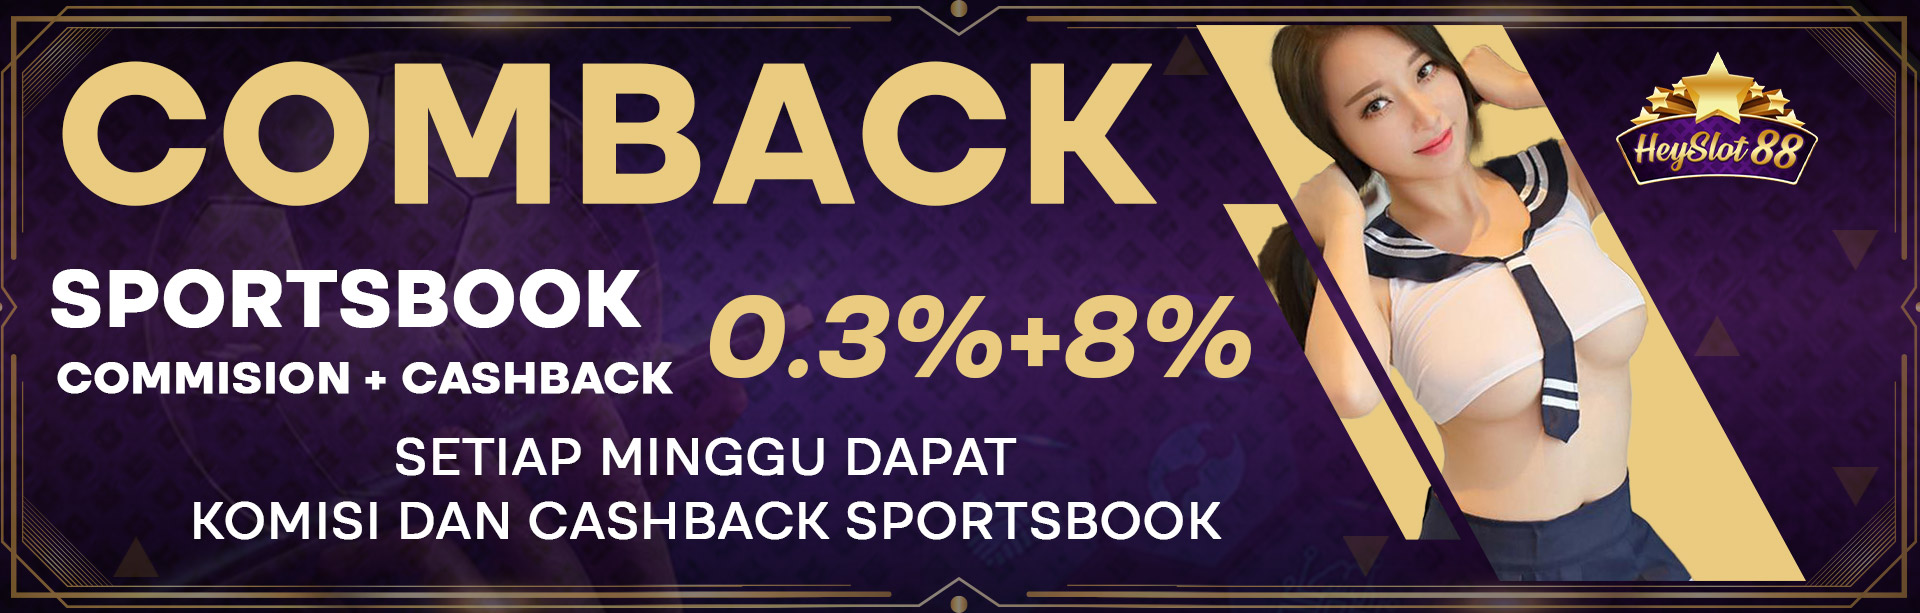 Bonus Komisi + Cashback Sportsbook 0.3% + 8%